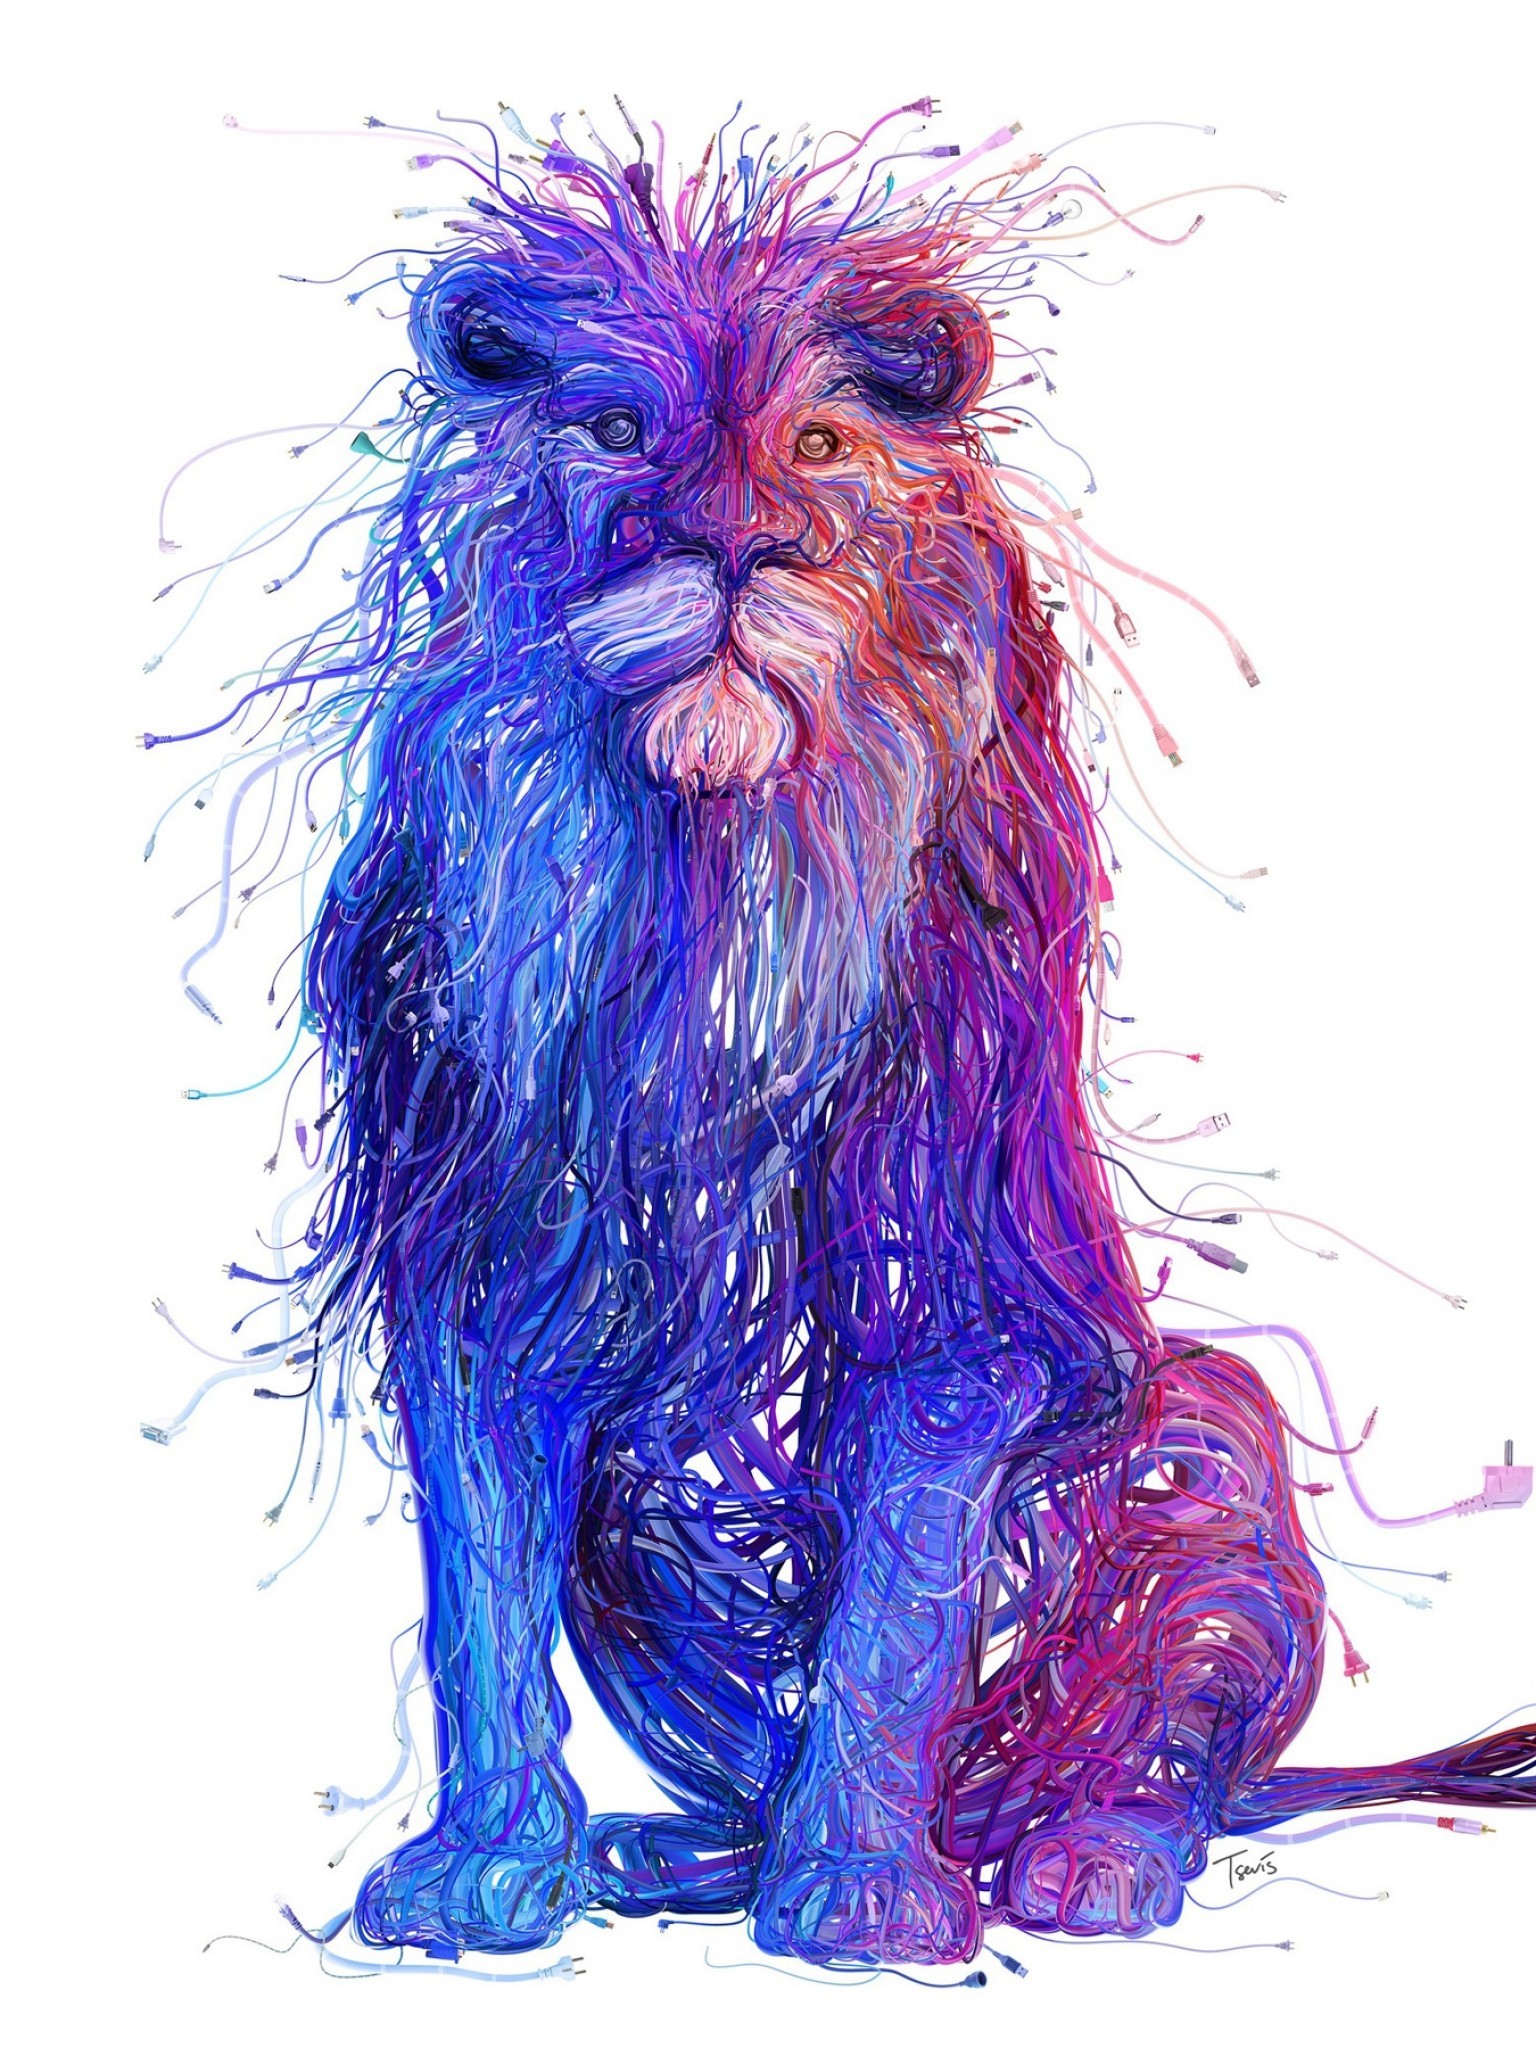 Lion, Artistic, Wires - 8k Resolution Ultra Hd - HD Wallpaper 